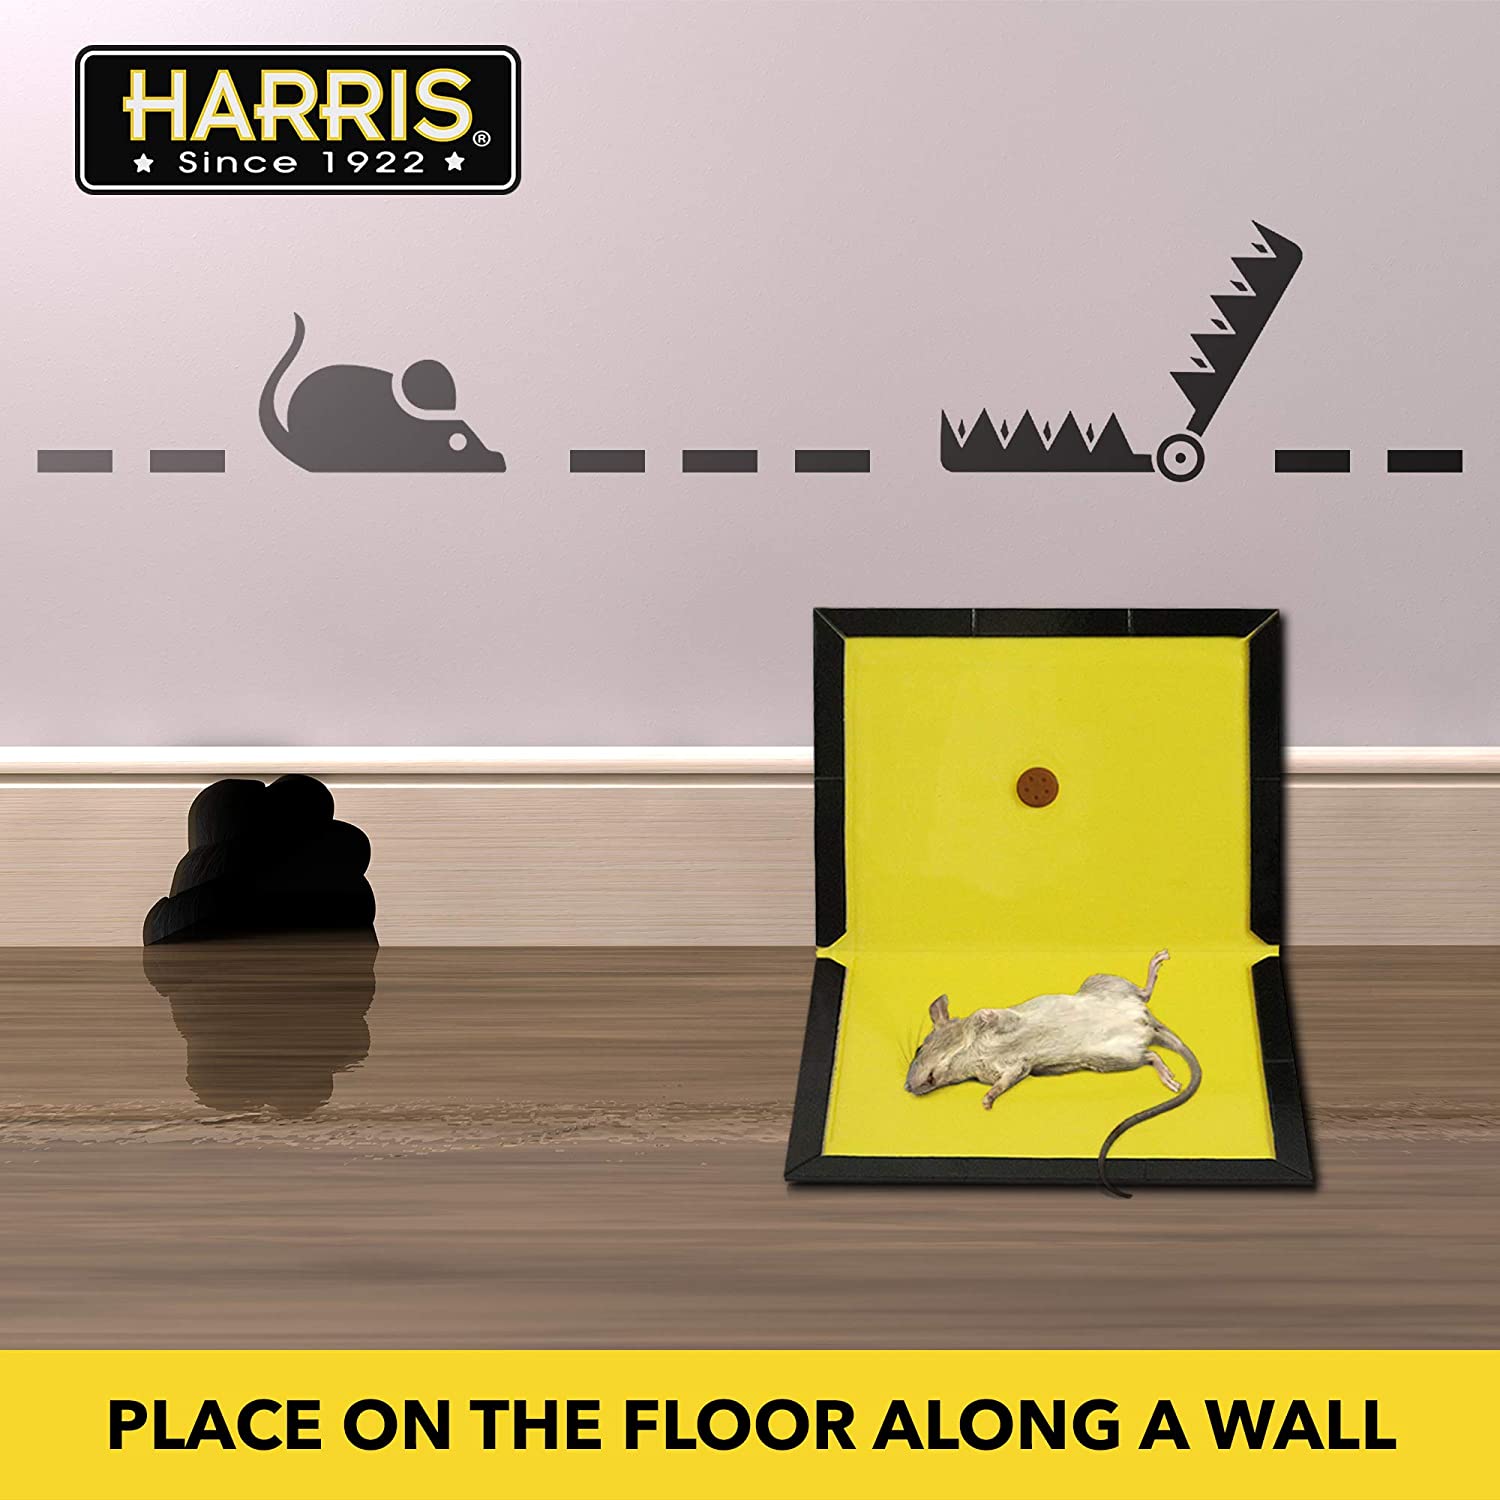 Harris Hmg-4 Mouse Glue Trap